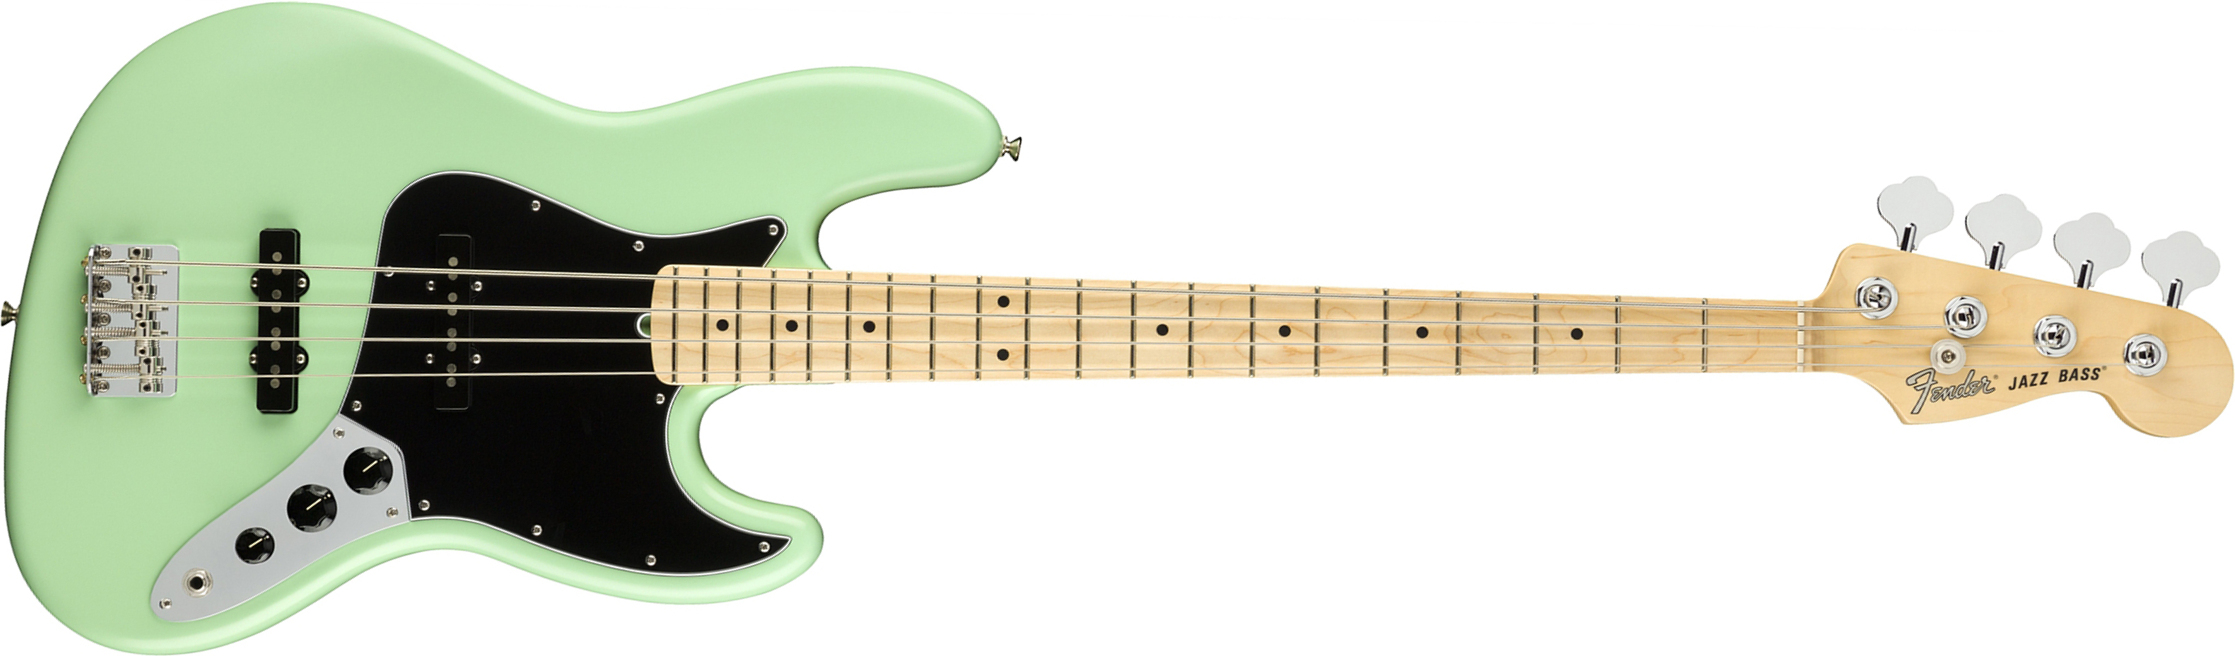 Fender Jazz Bass American Performer Usa Mn - Satin Surf Green - Bajo eléctrico de cuerpo sólido - Main picture